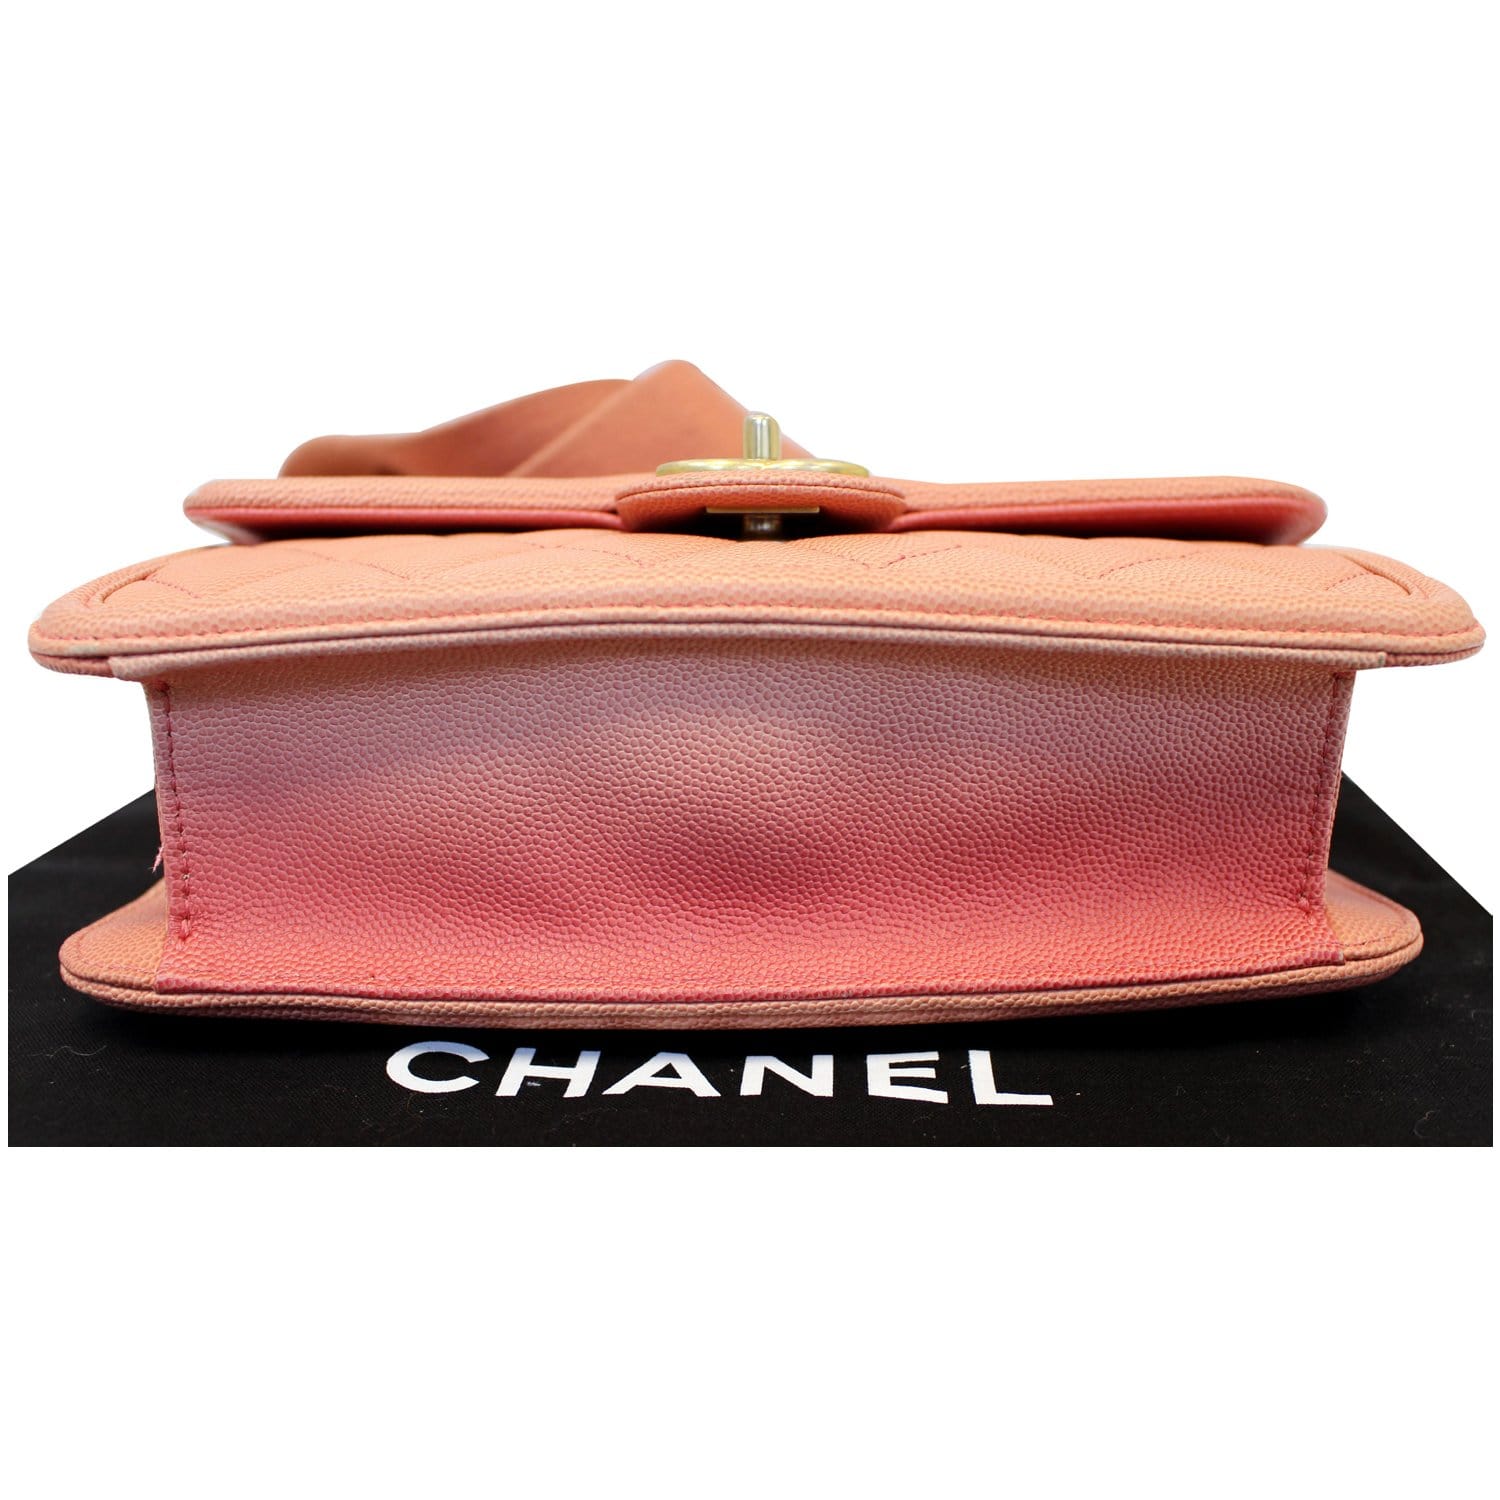 Bags, Looks Like A Chanel Sunset On The Sea Bag